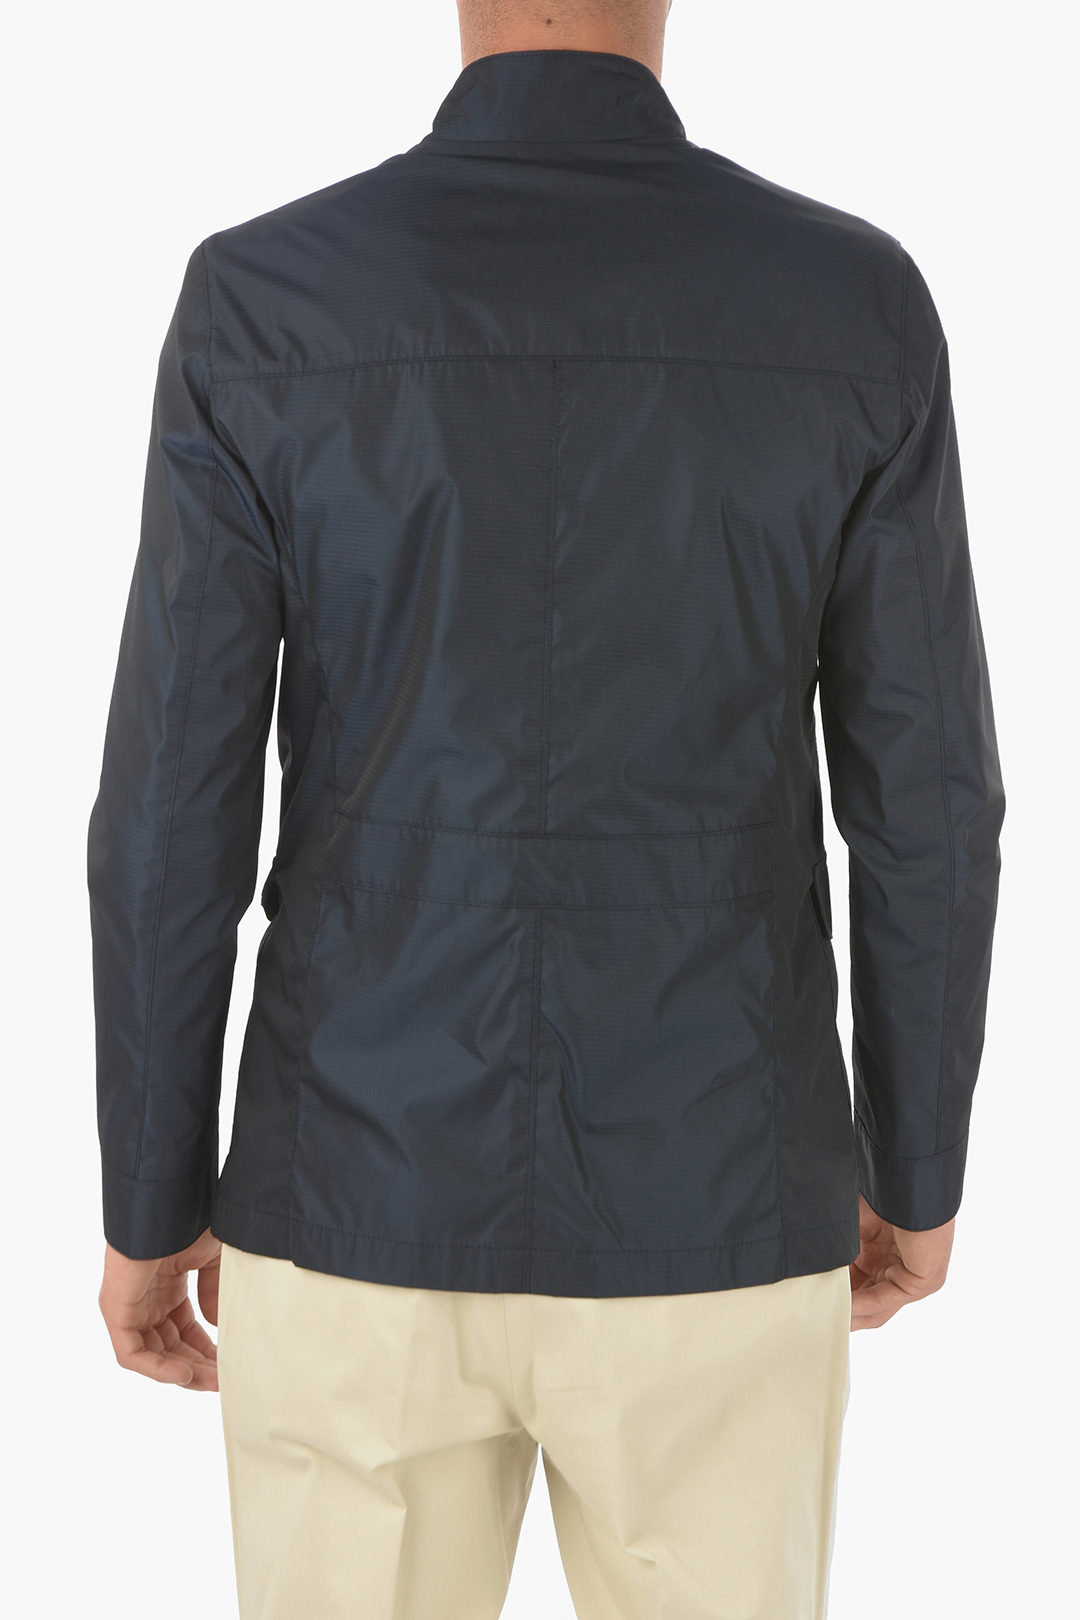 Corneliani CC COLLECTION Nylon JAKAR Saharan Jacket men - Glamood Outlet